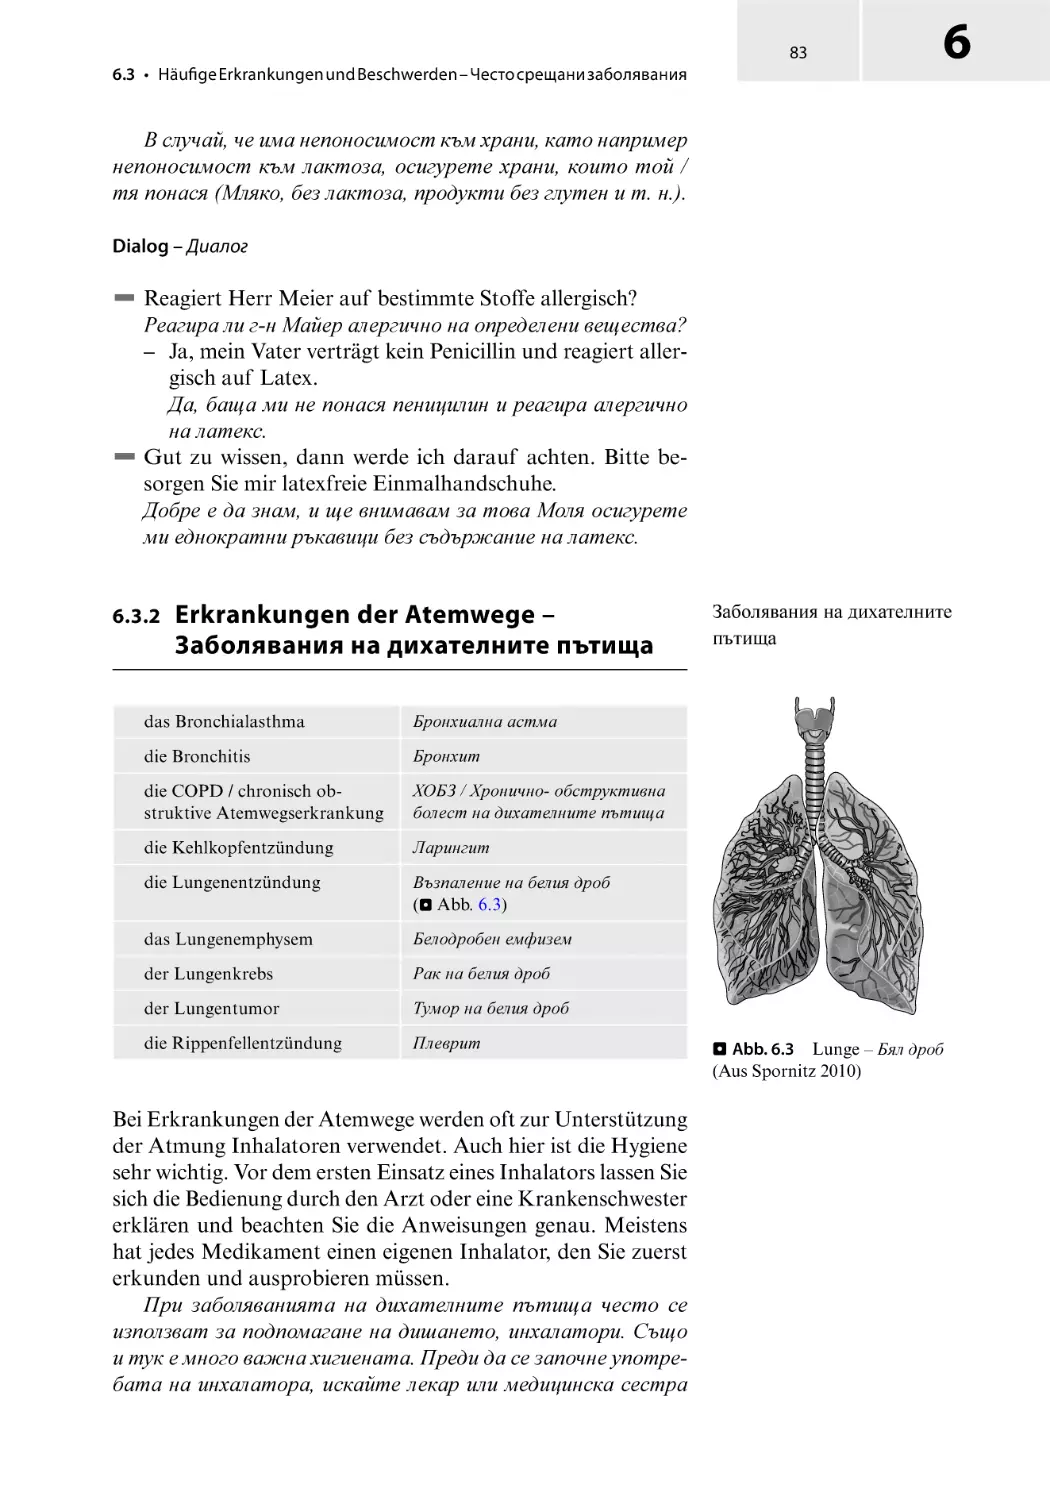 6.3.2 Erkrankungen der Atemwege – Заболявания на дихателните пътища